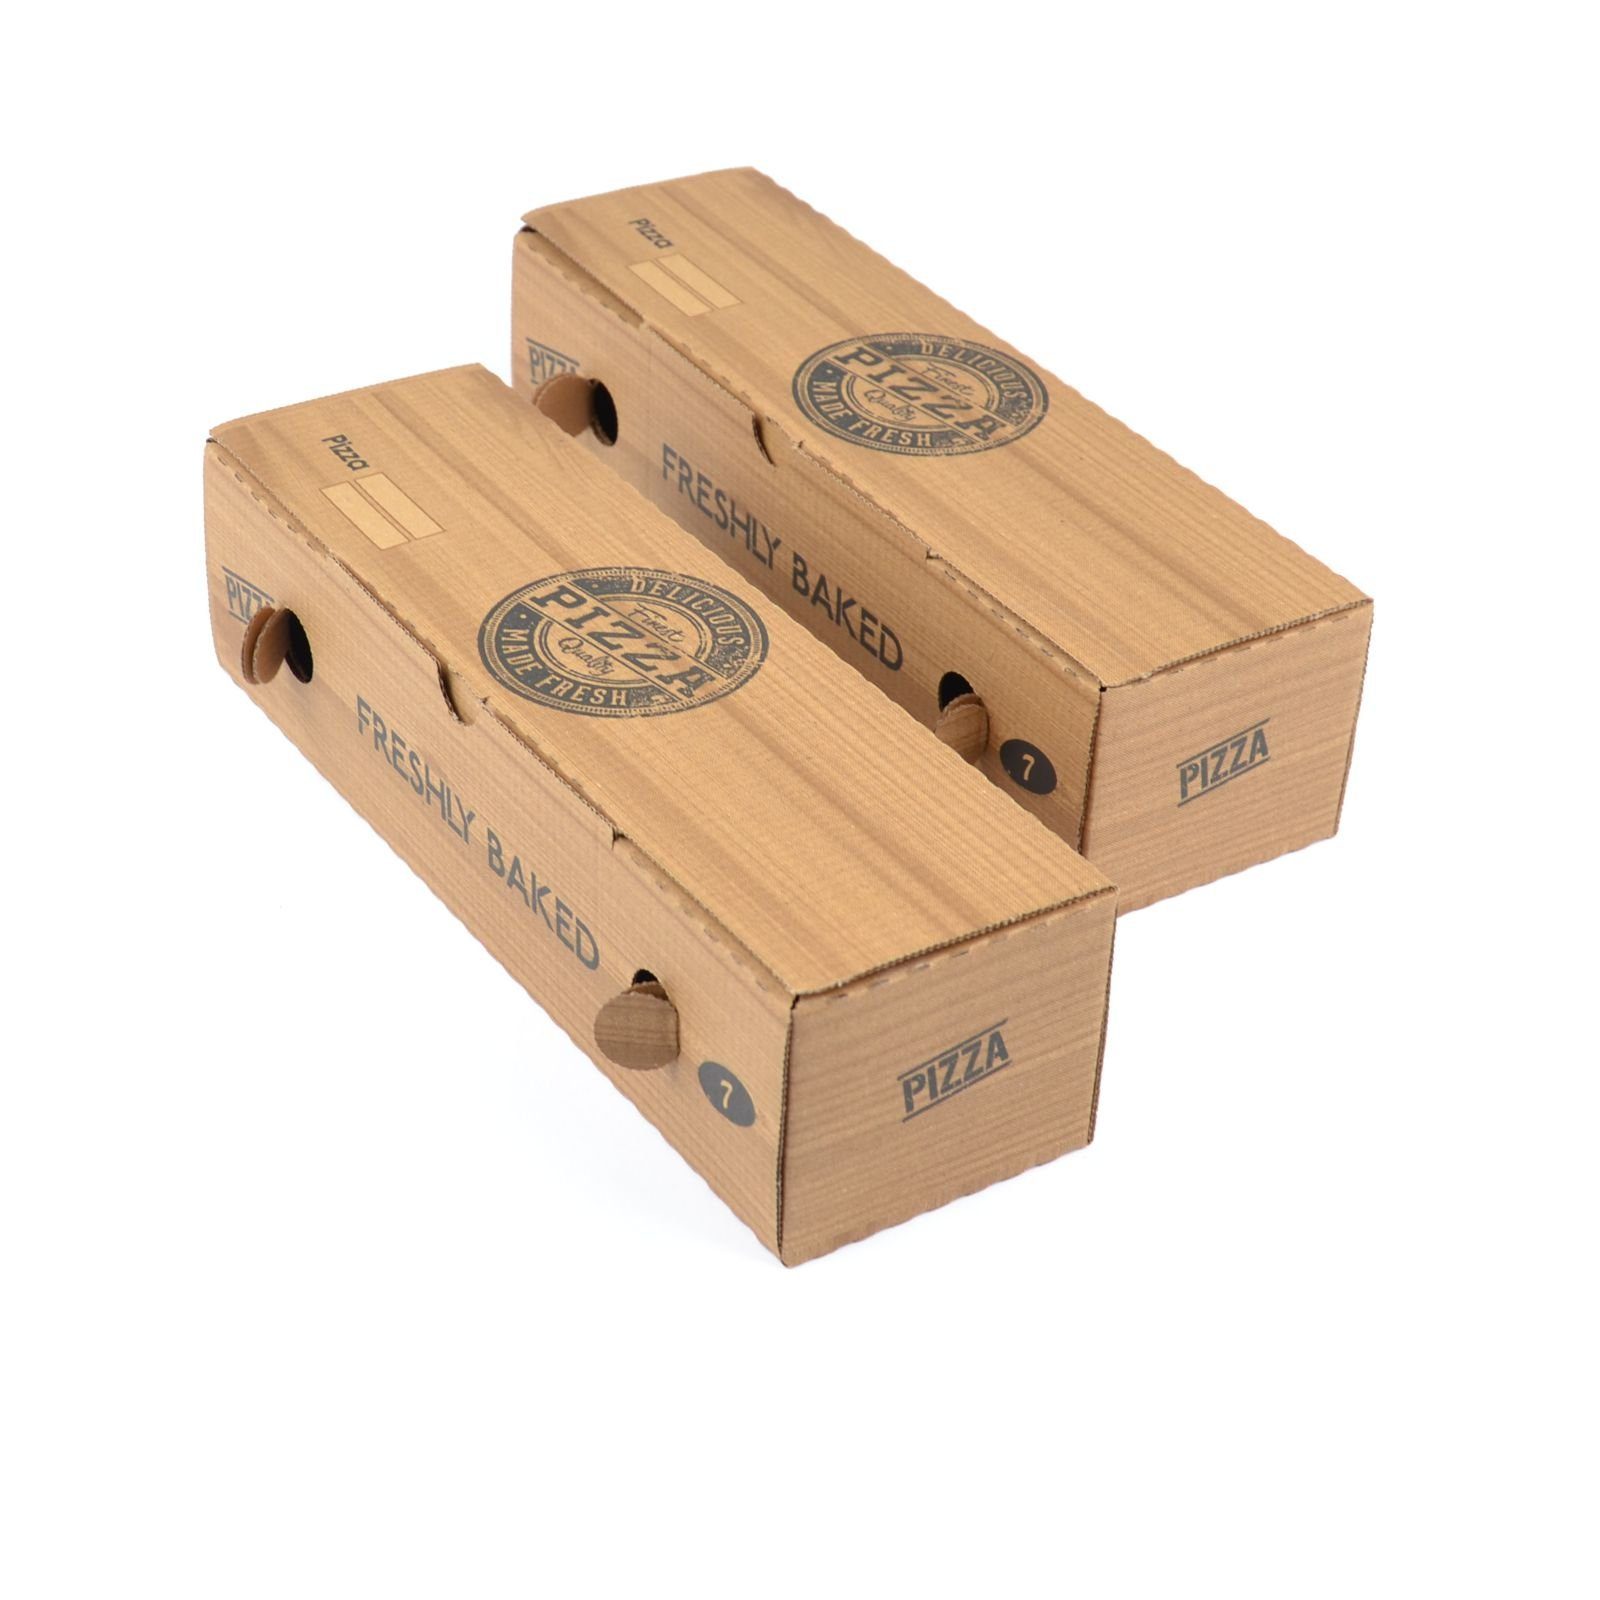 Box Pitabox cm) Pizza-Motiv Rollobox Lahmacun Dürümbox Pizzakartons, 100 "Rollo" Rollo Stück kraftbraun kraft, (7×8×28 Einwegschale Modell